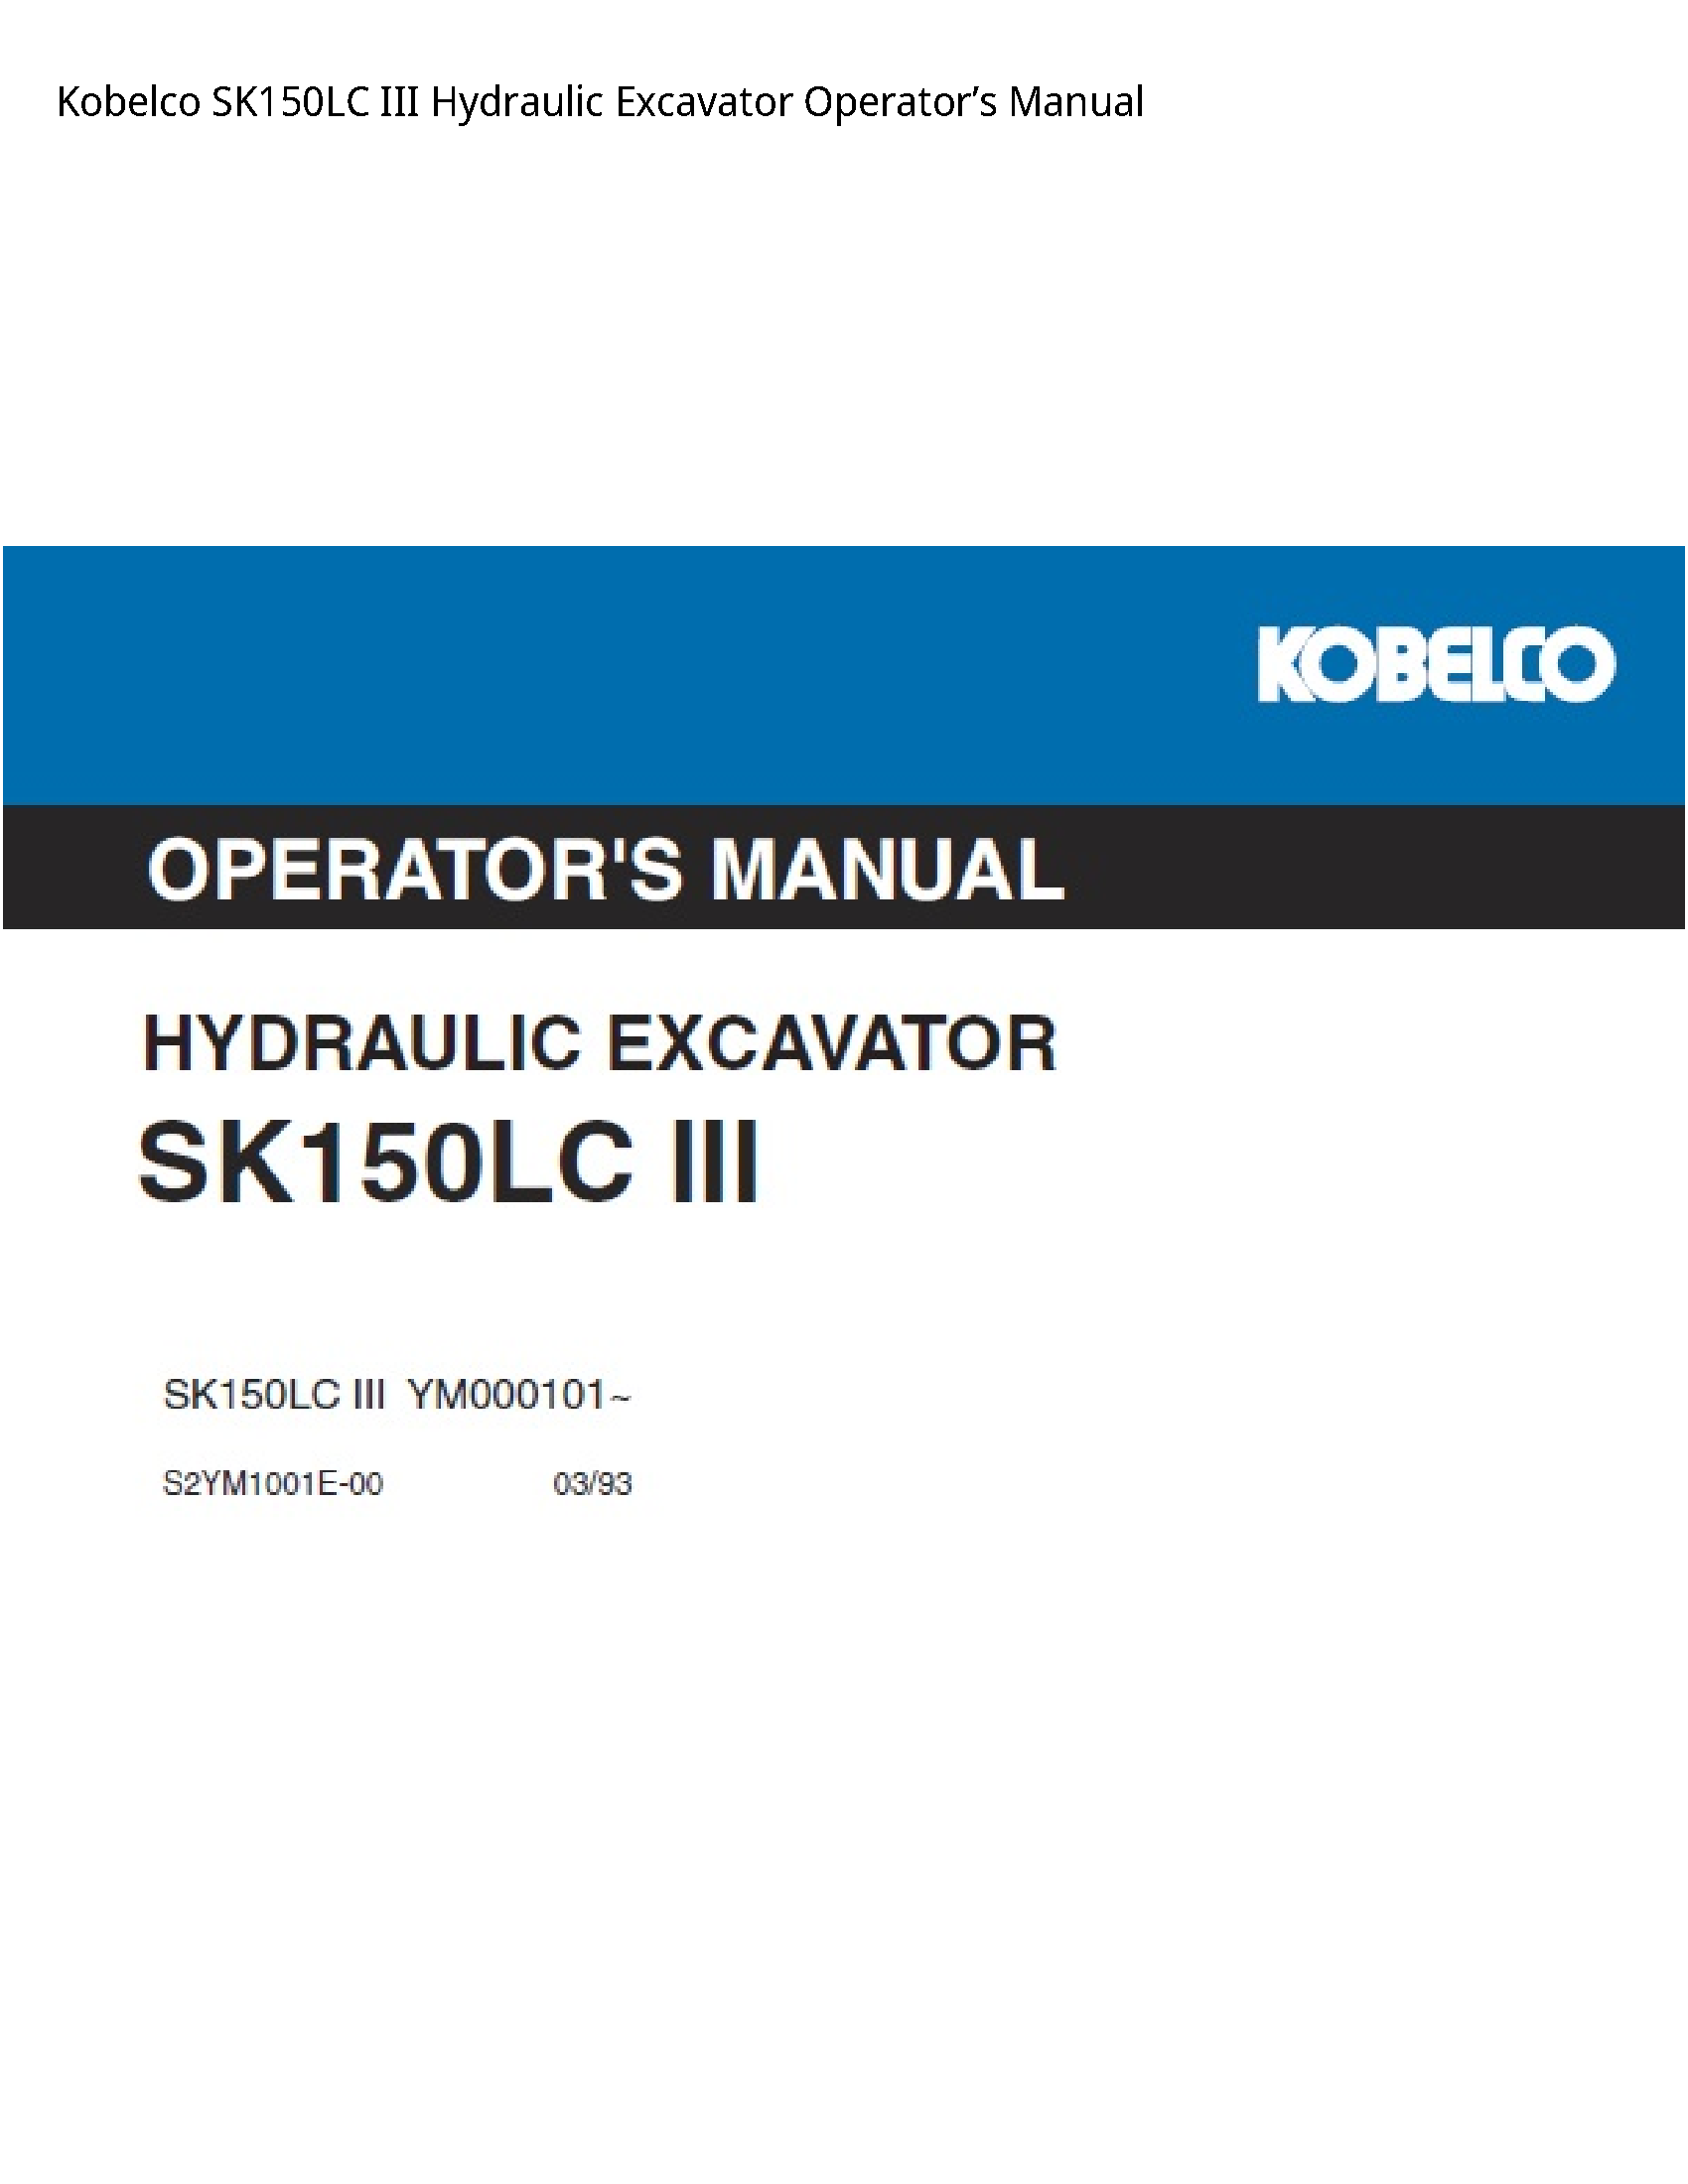 Kobelco SK150LC III Hydraulic Excavator Operator’s manual